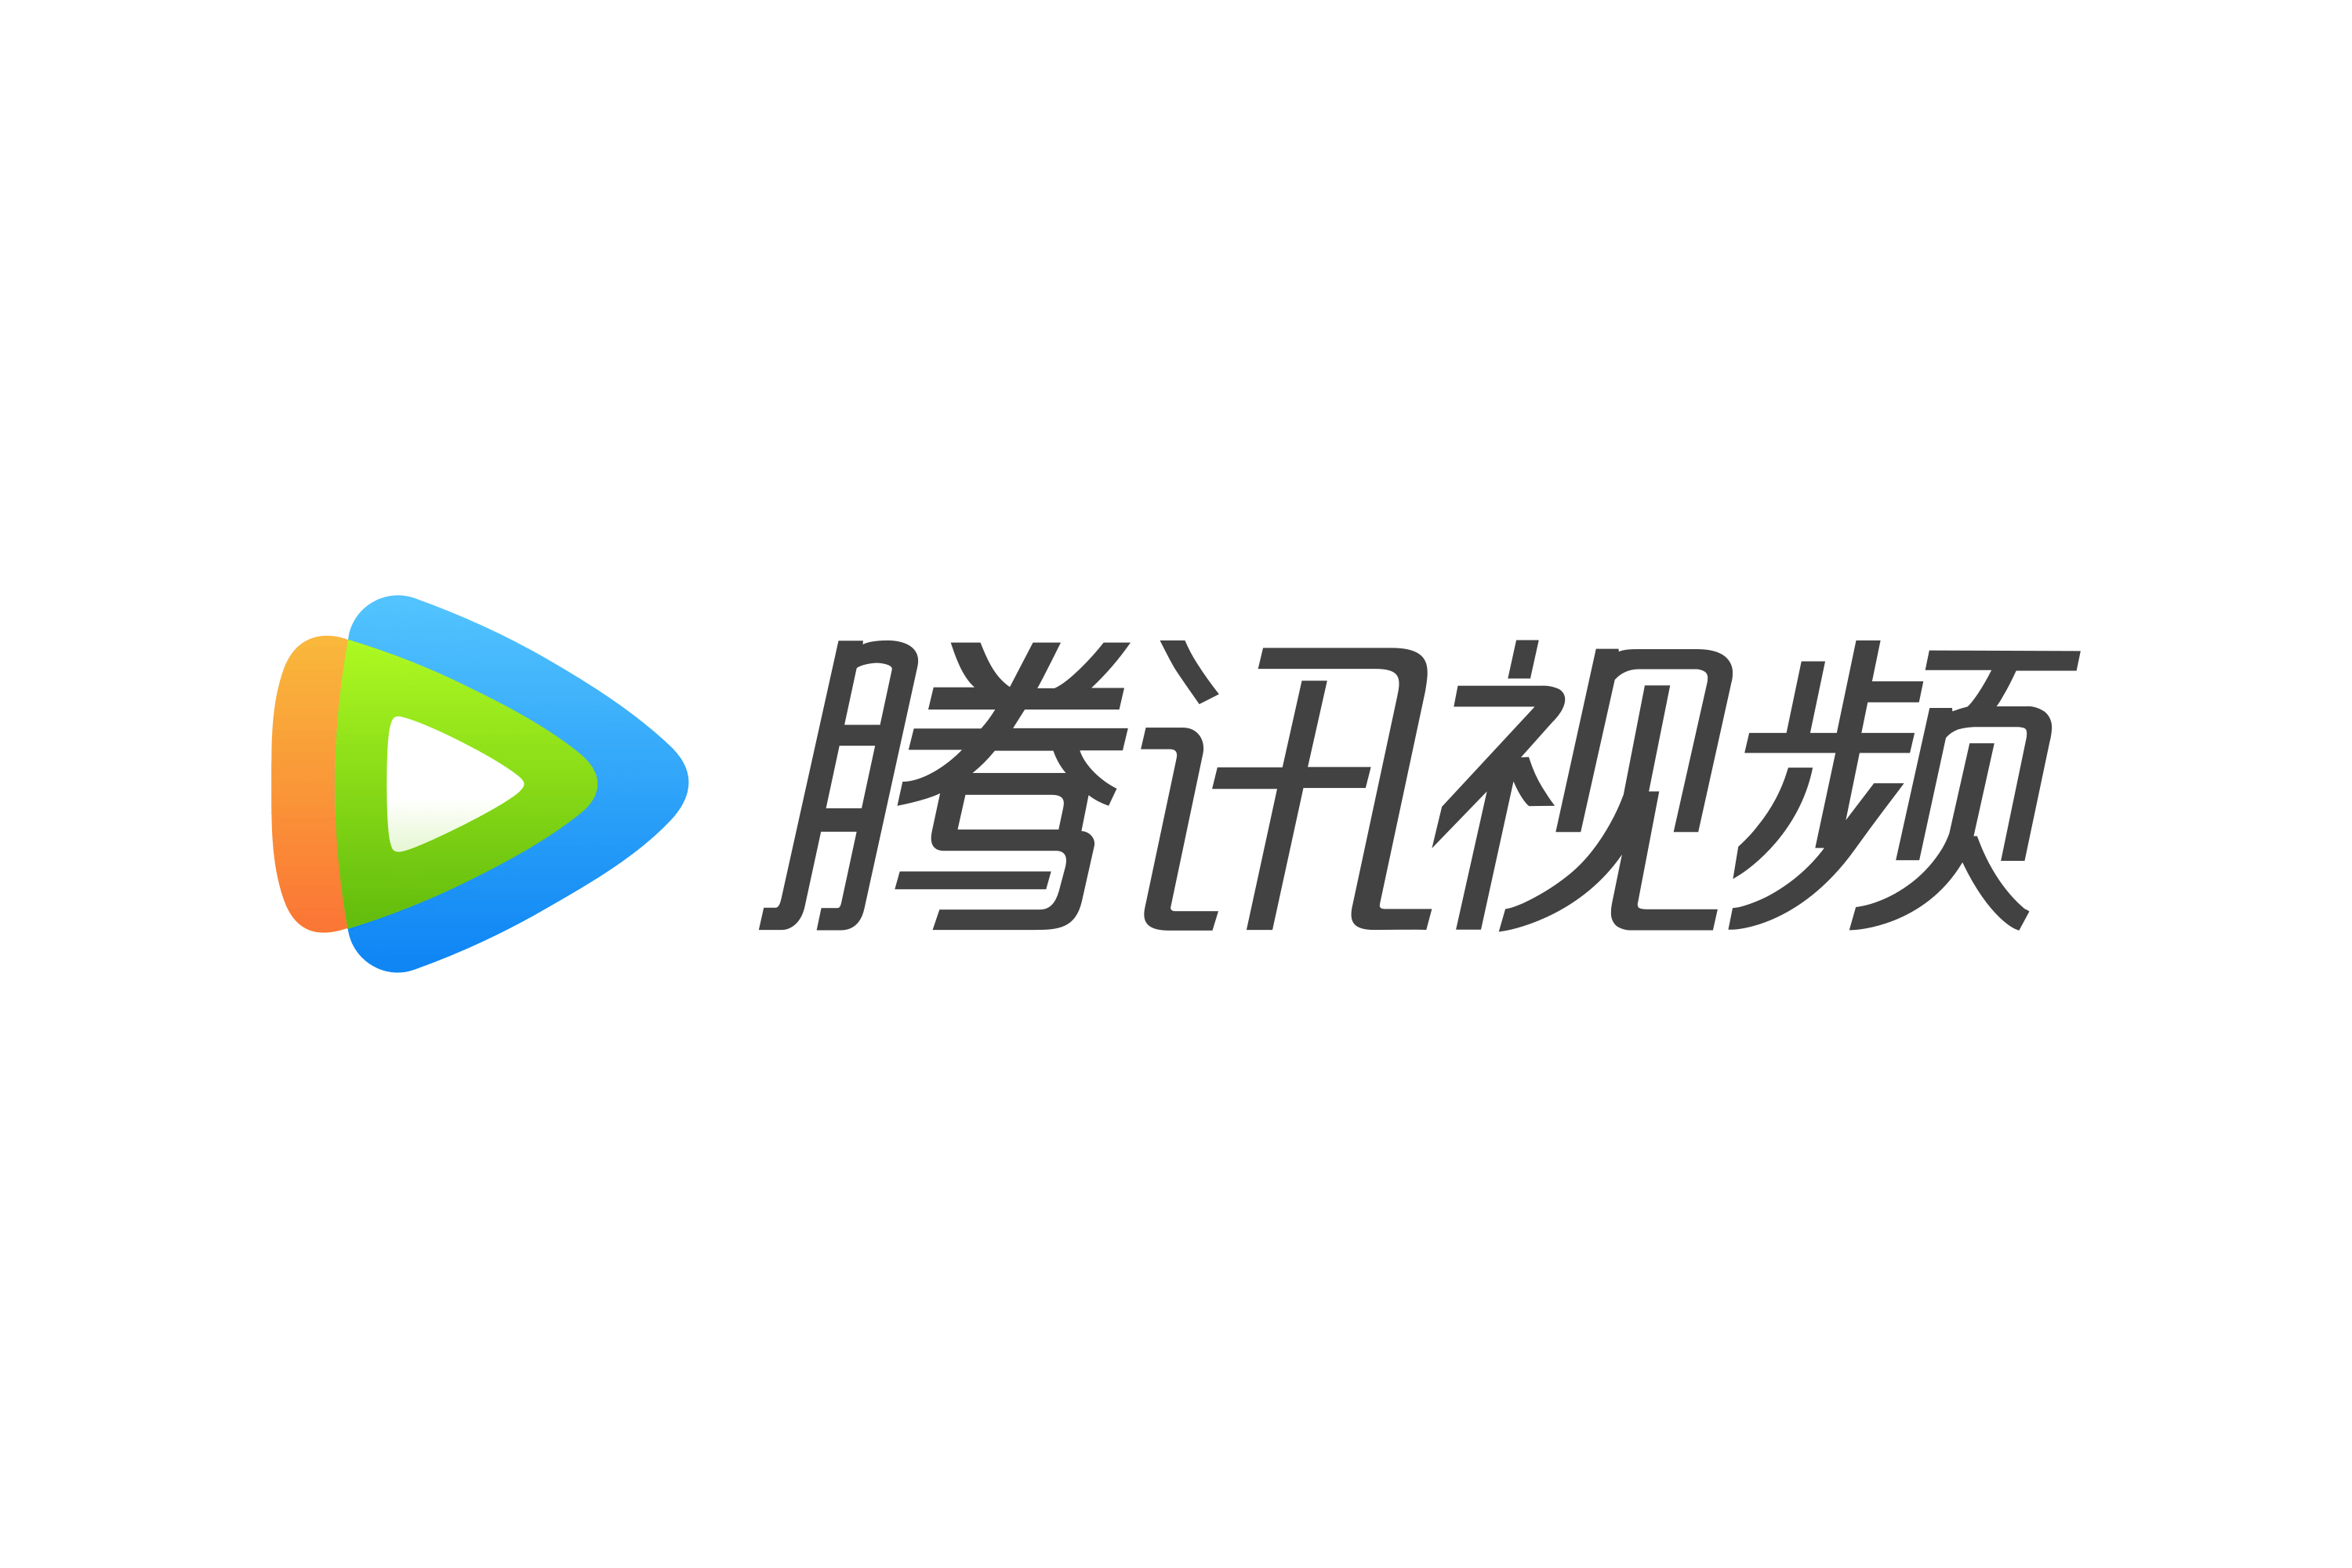 Tencent Video - WETV Logo (PNG) by AmazingToluDada3000 on DeviantArt